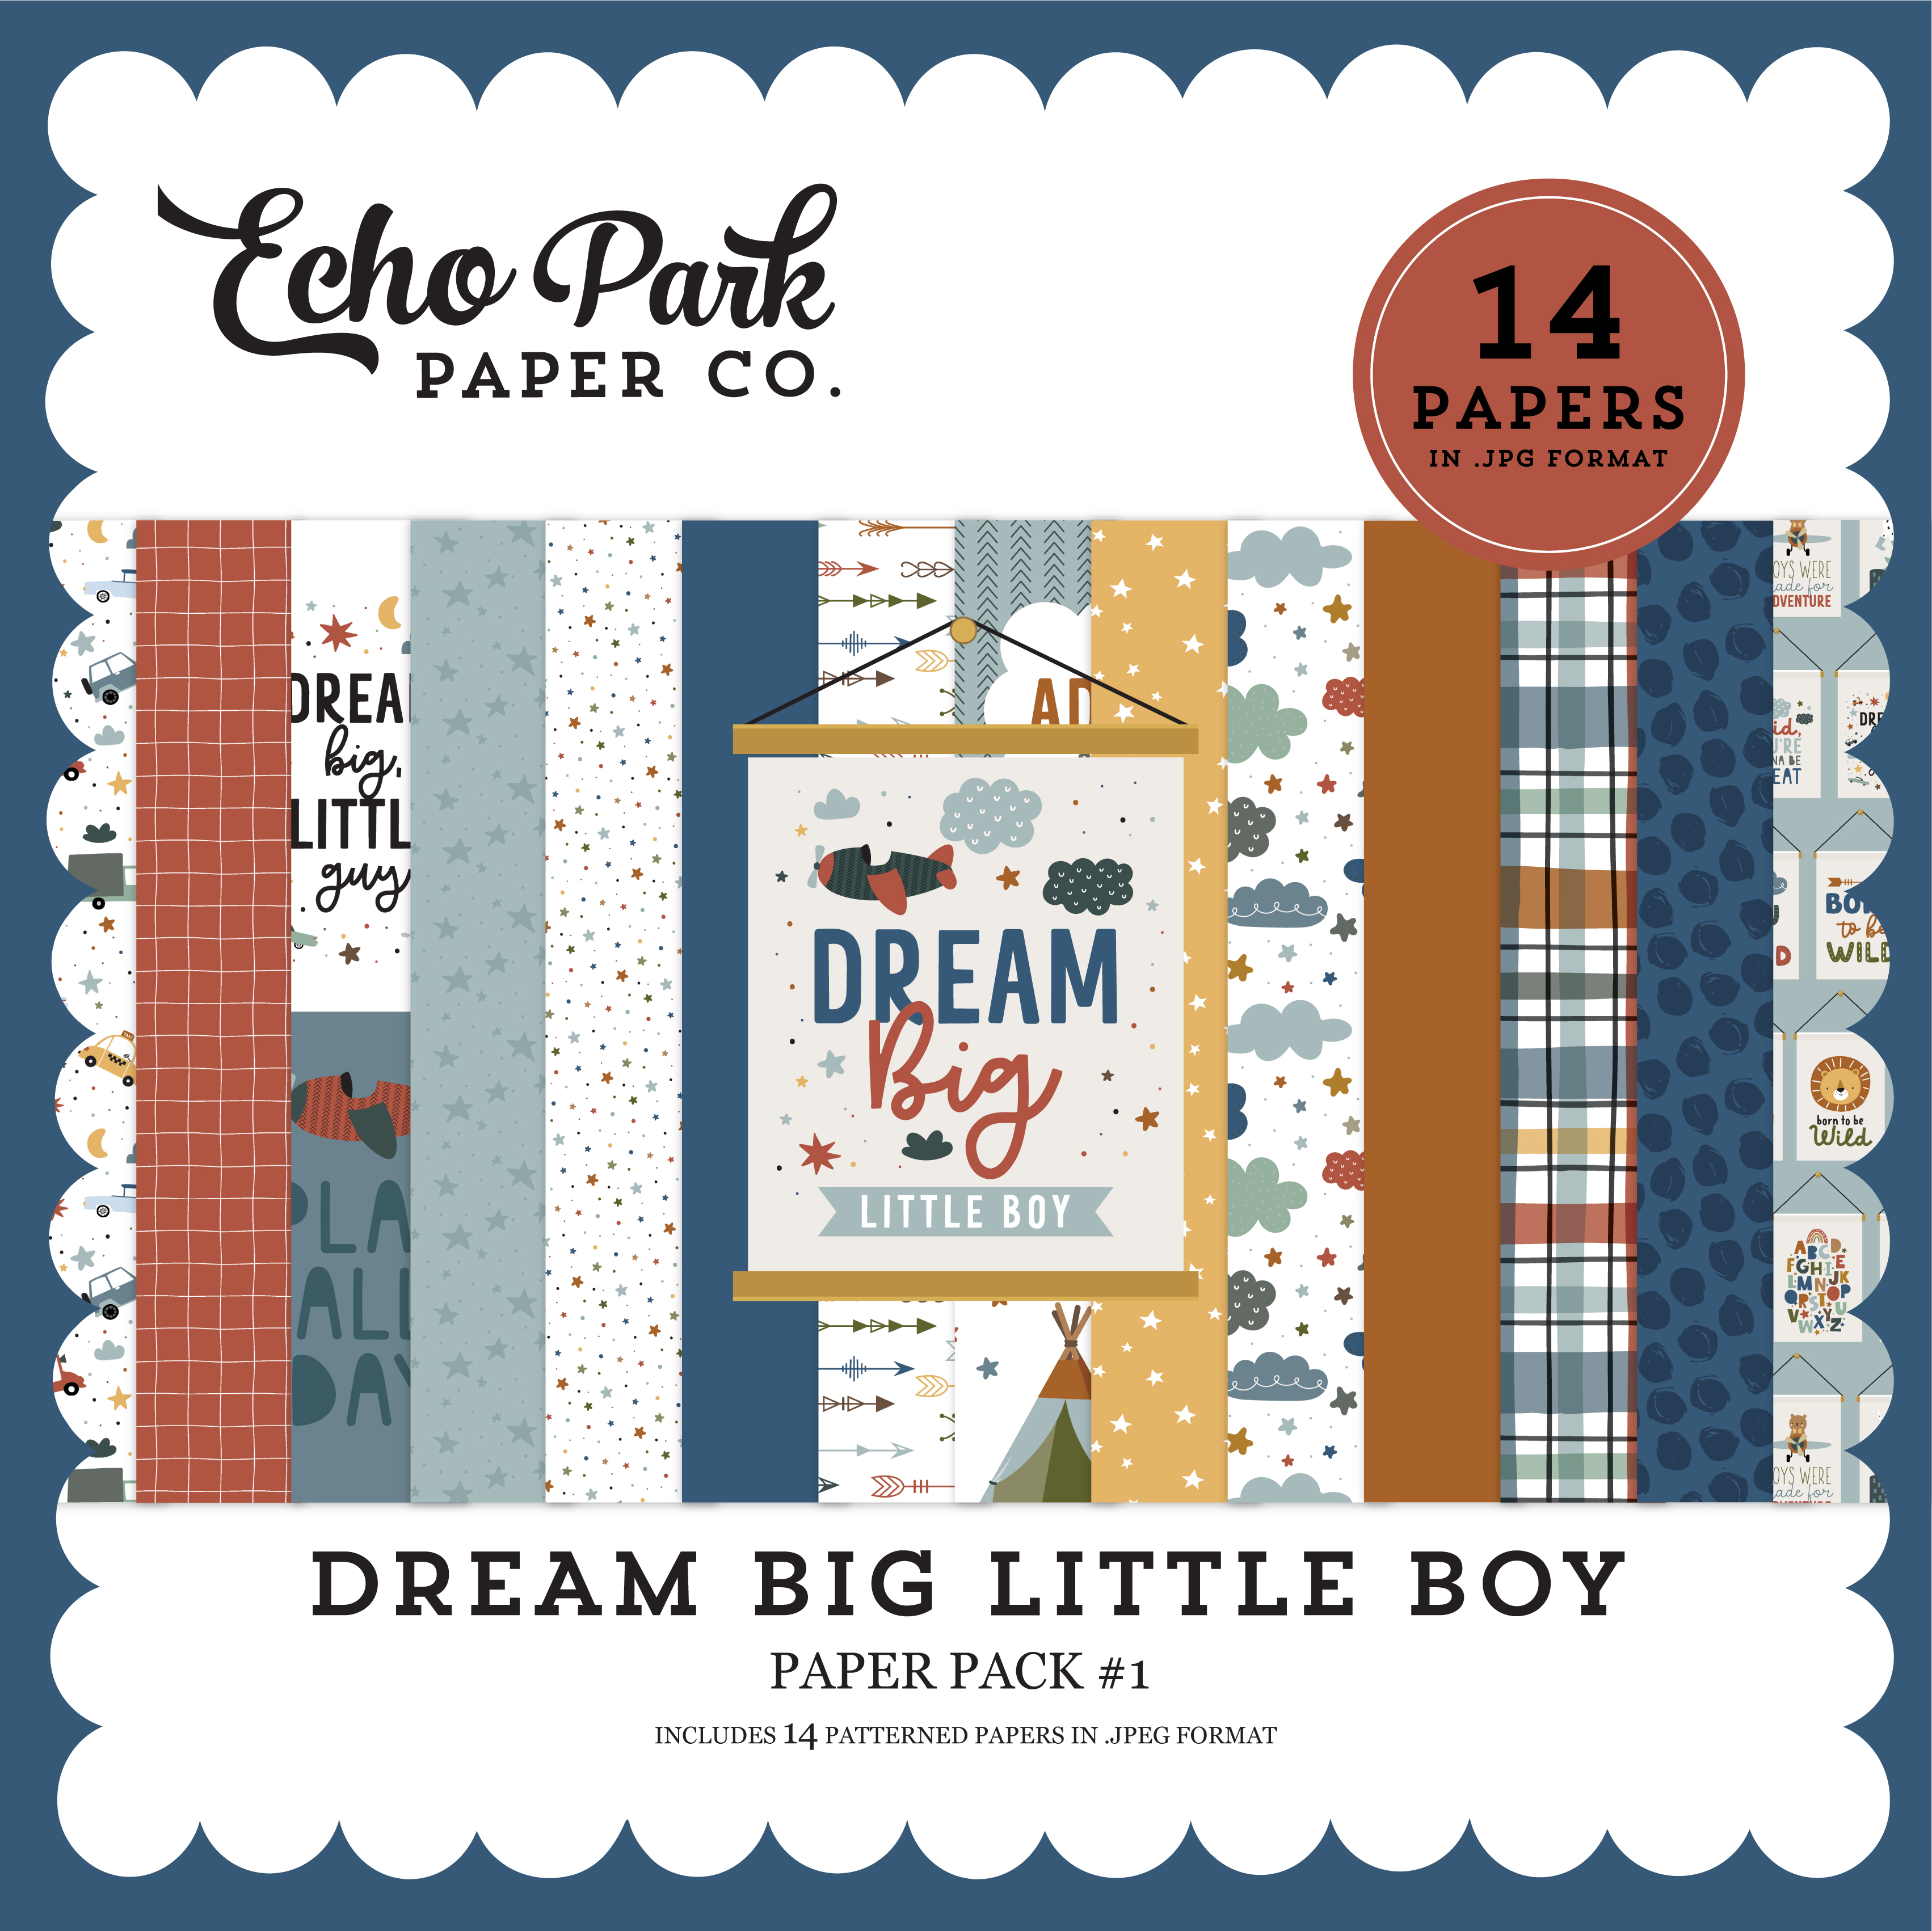 Dream Big Little Boy Paper Pack #1